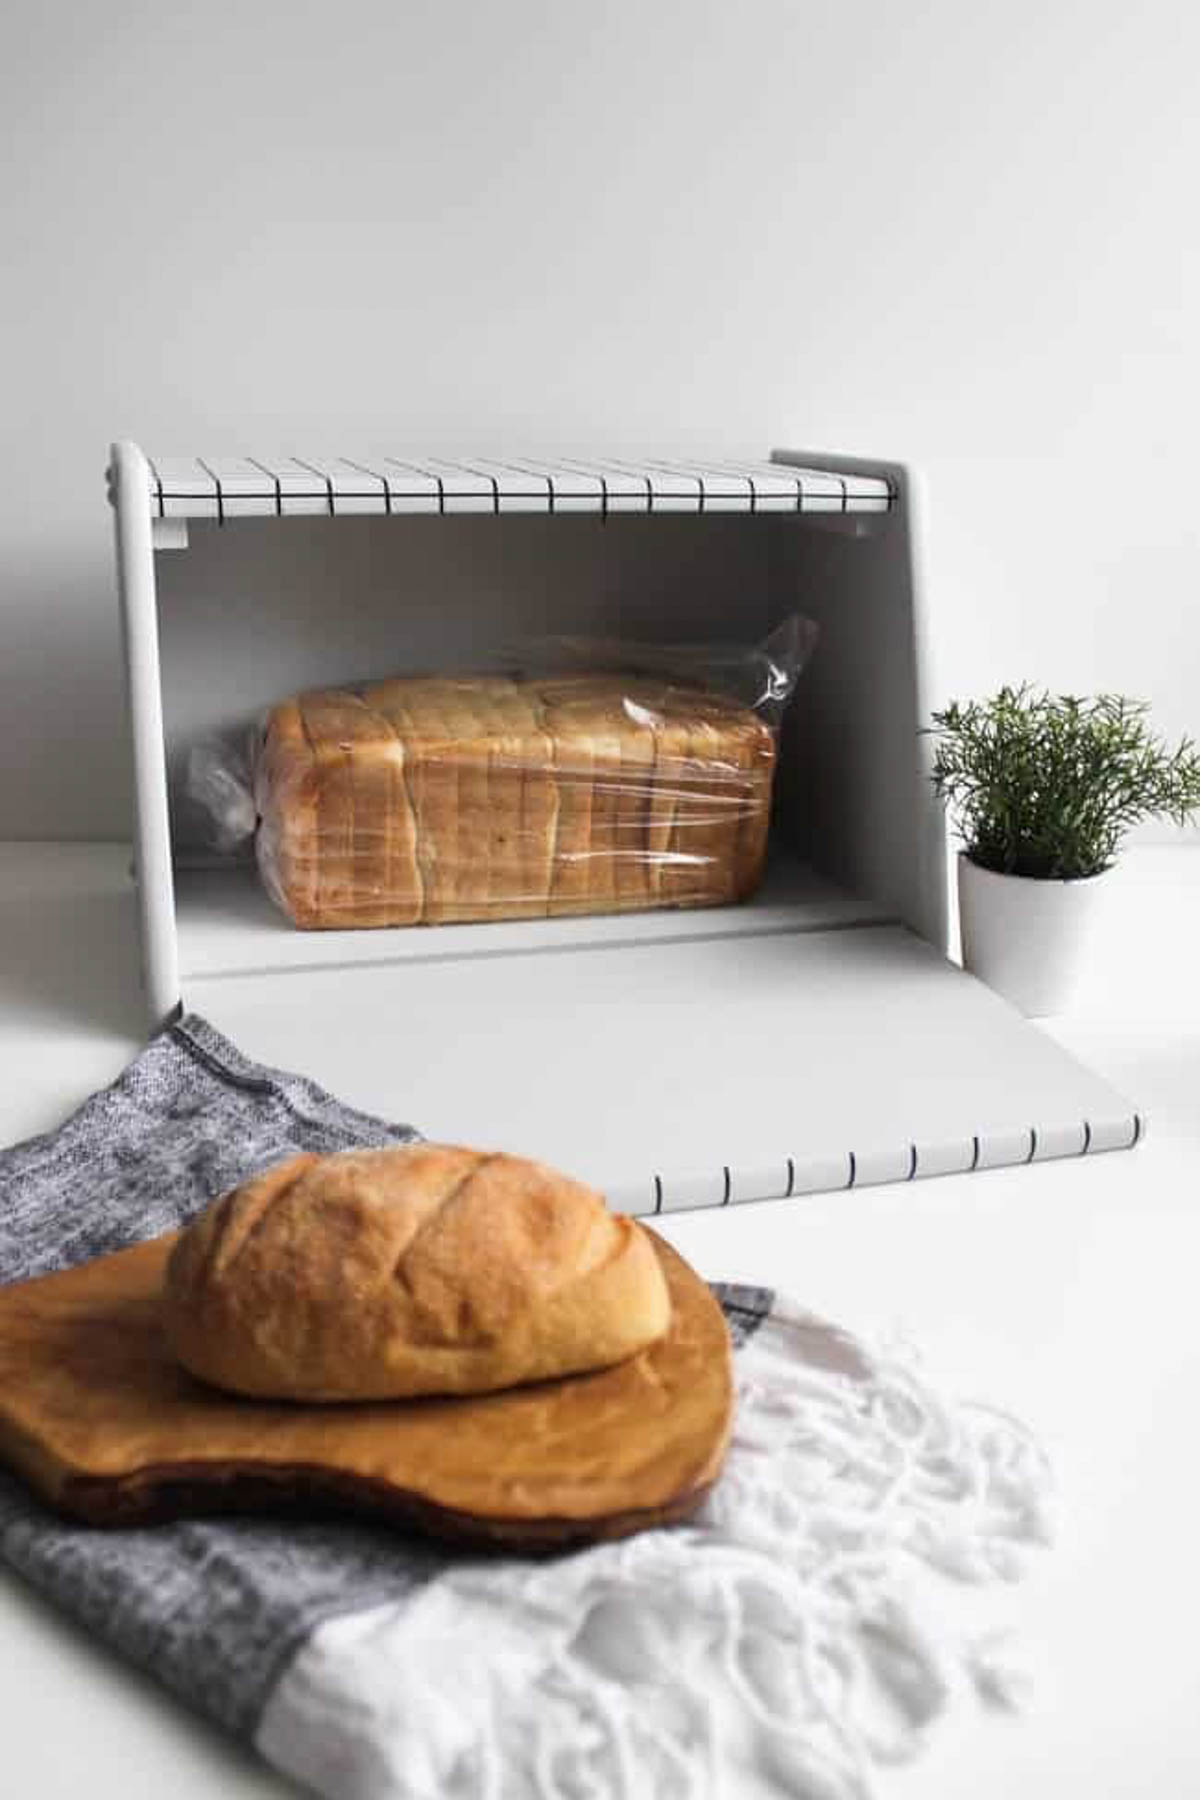 Bread sitting in the DIY bread box